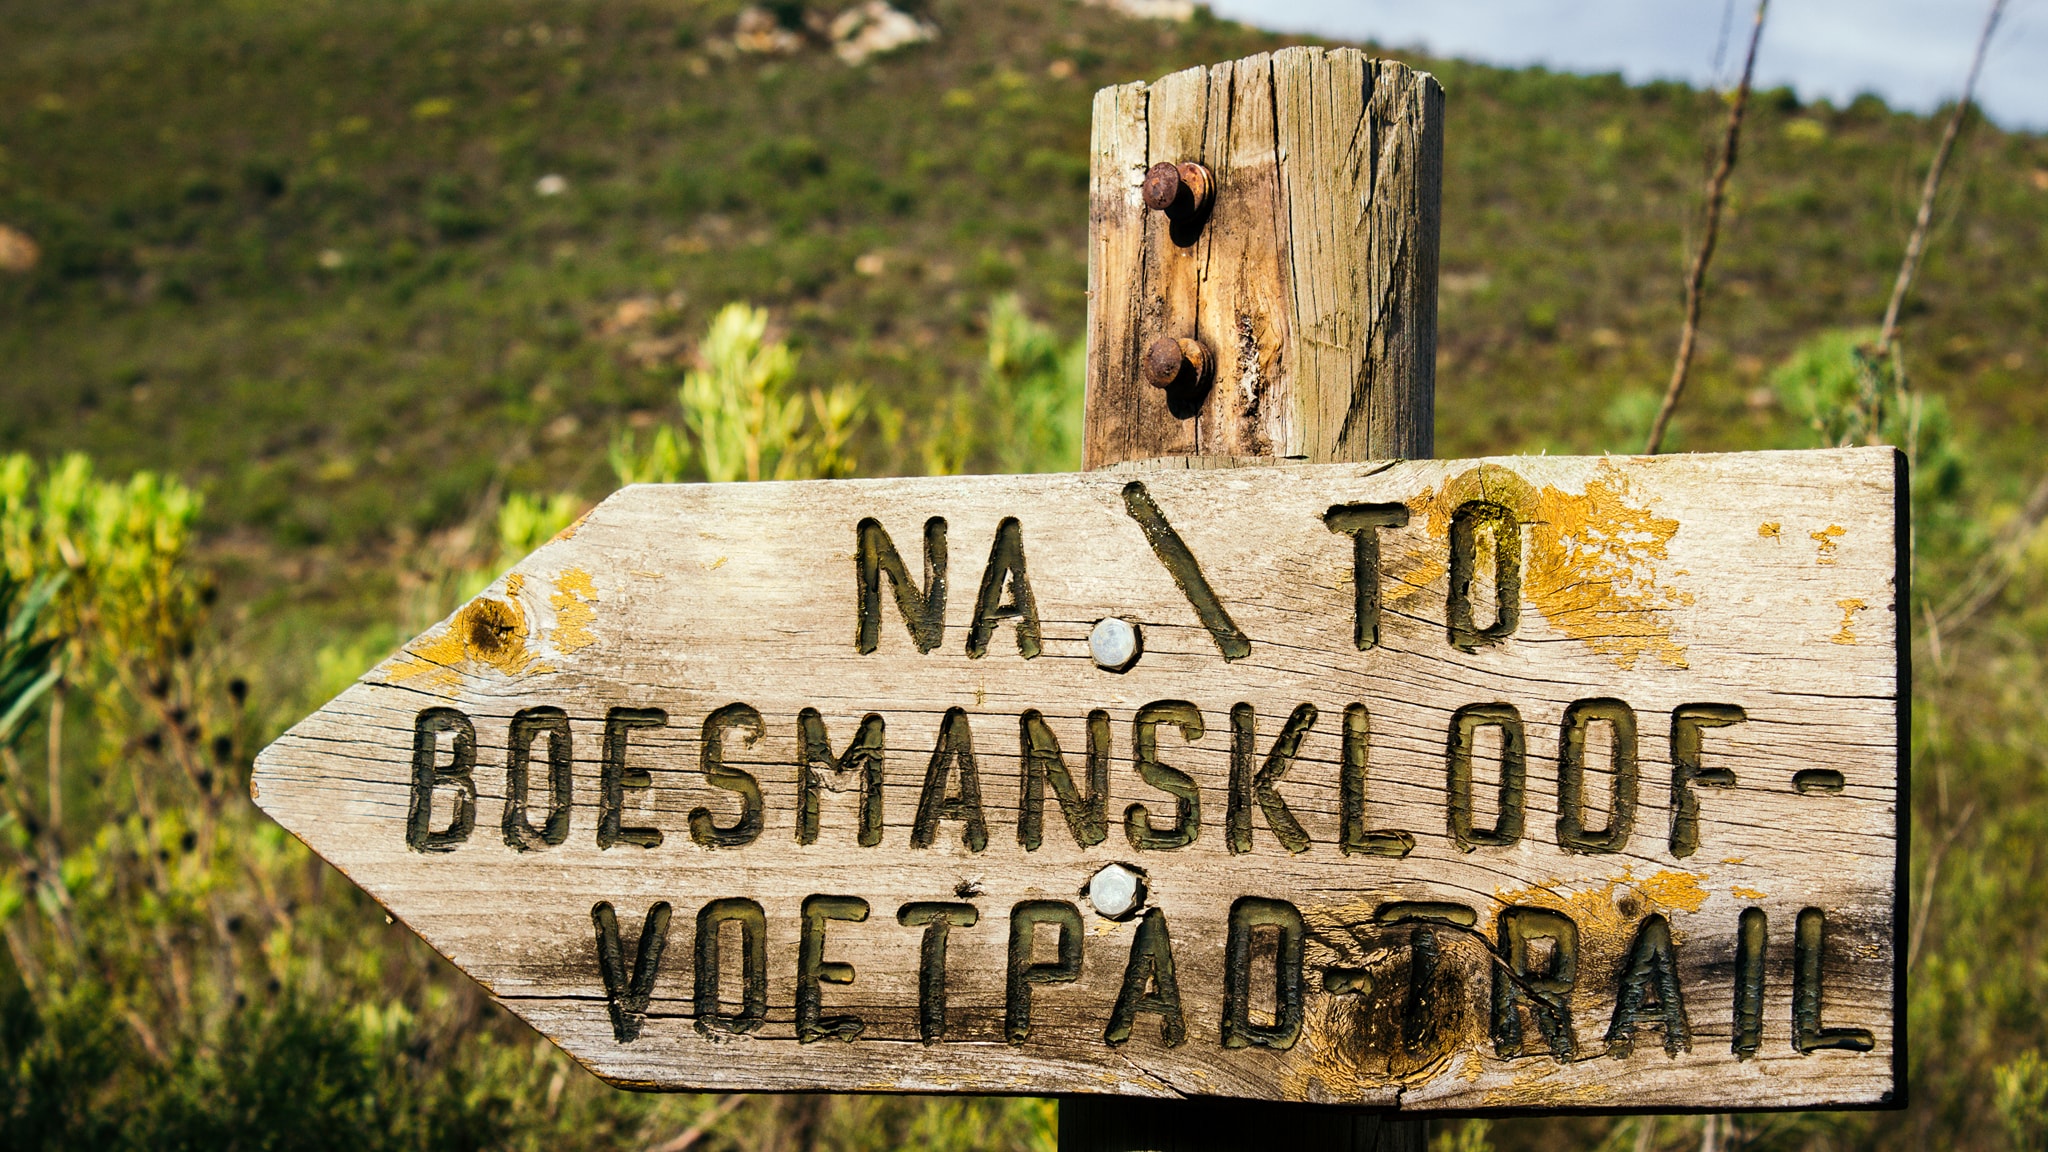 Boesmanskloof hiking trail, best hiking trails in the western cape south africa